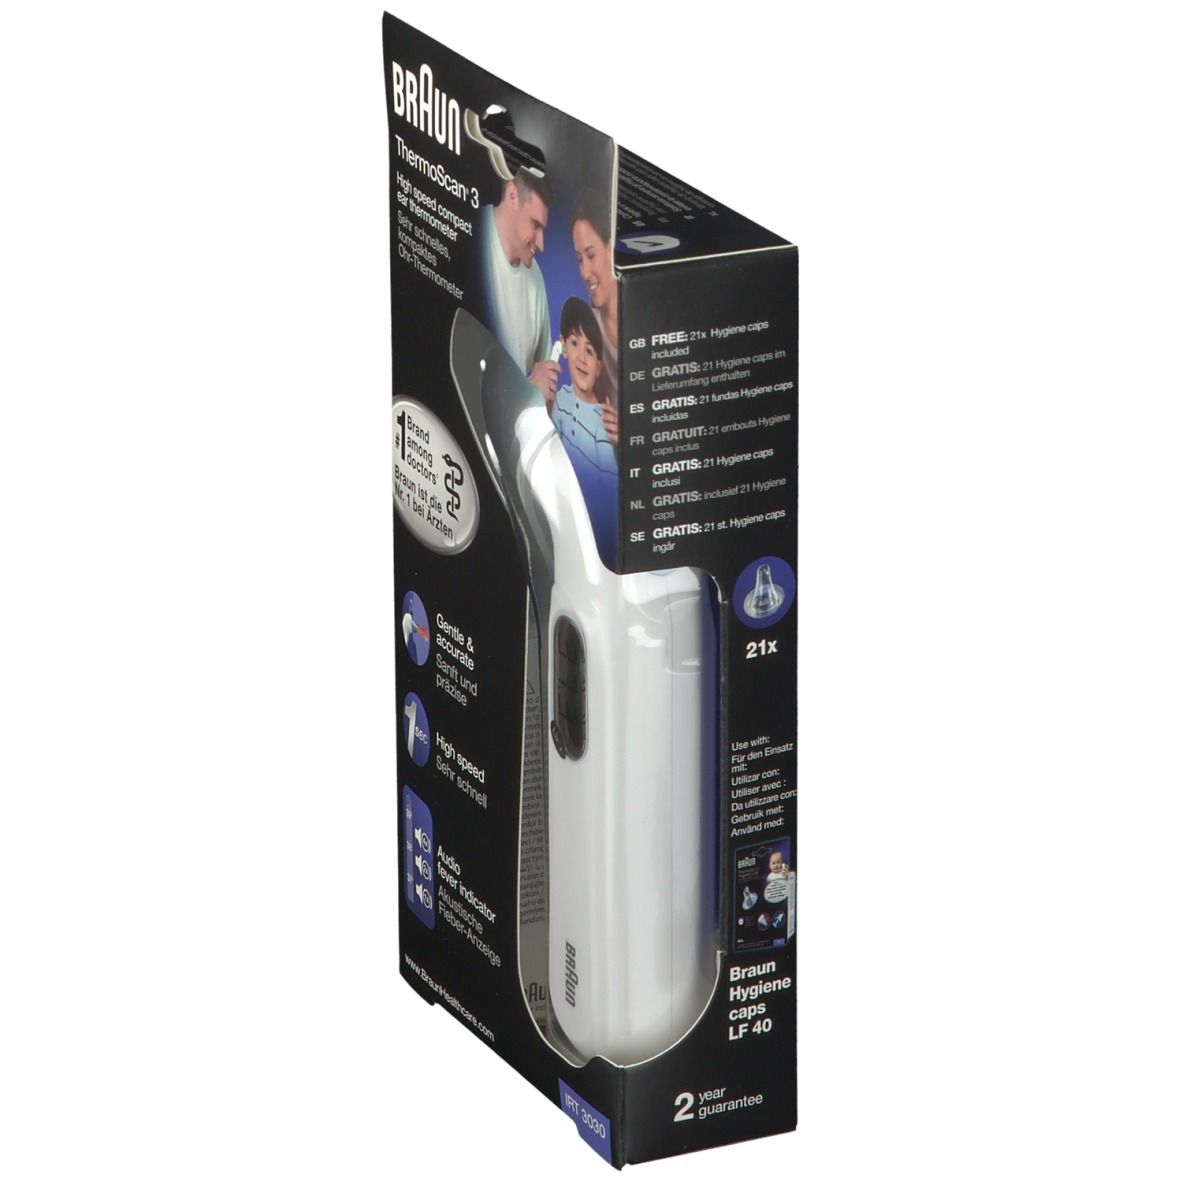 Braun ThermoScan® 3 Ohr-Kompaktthermometer